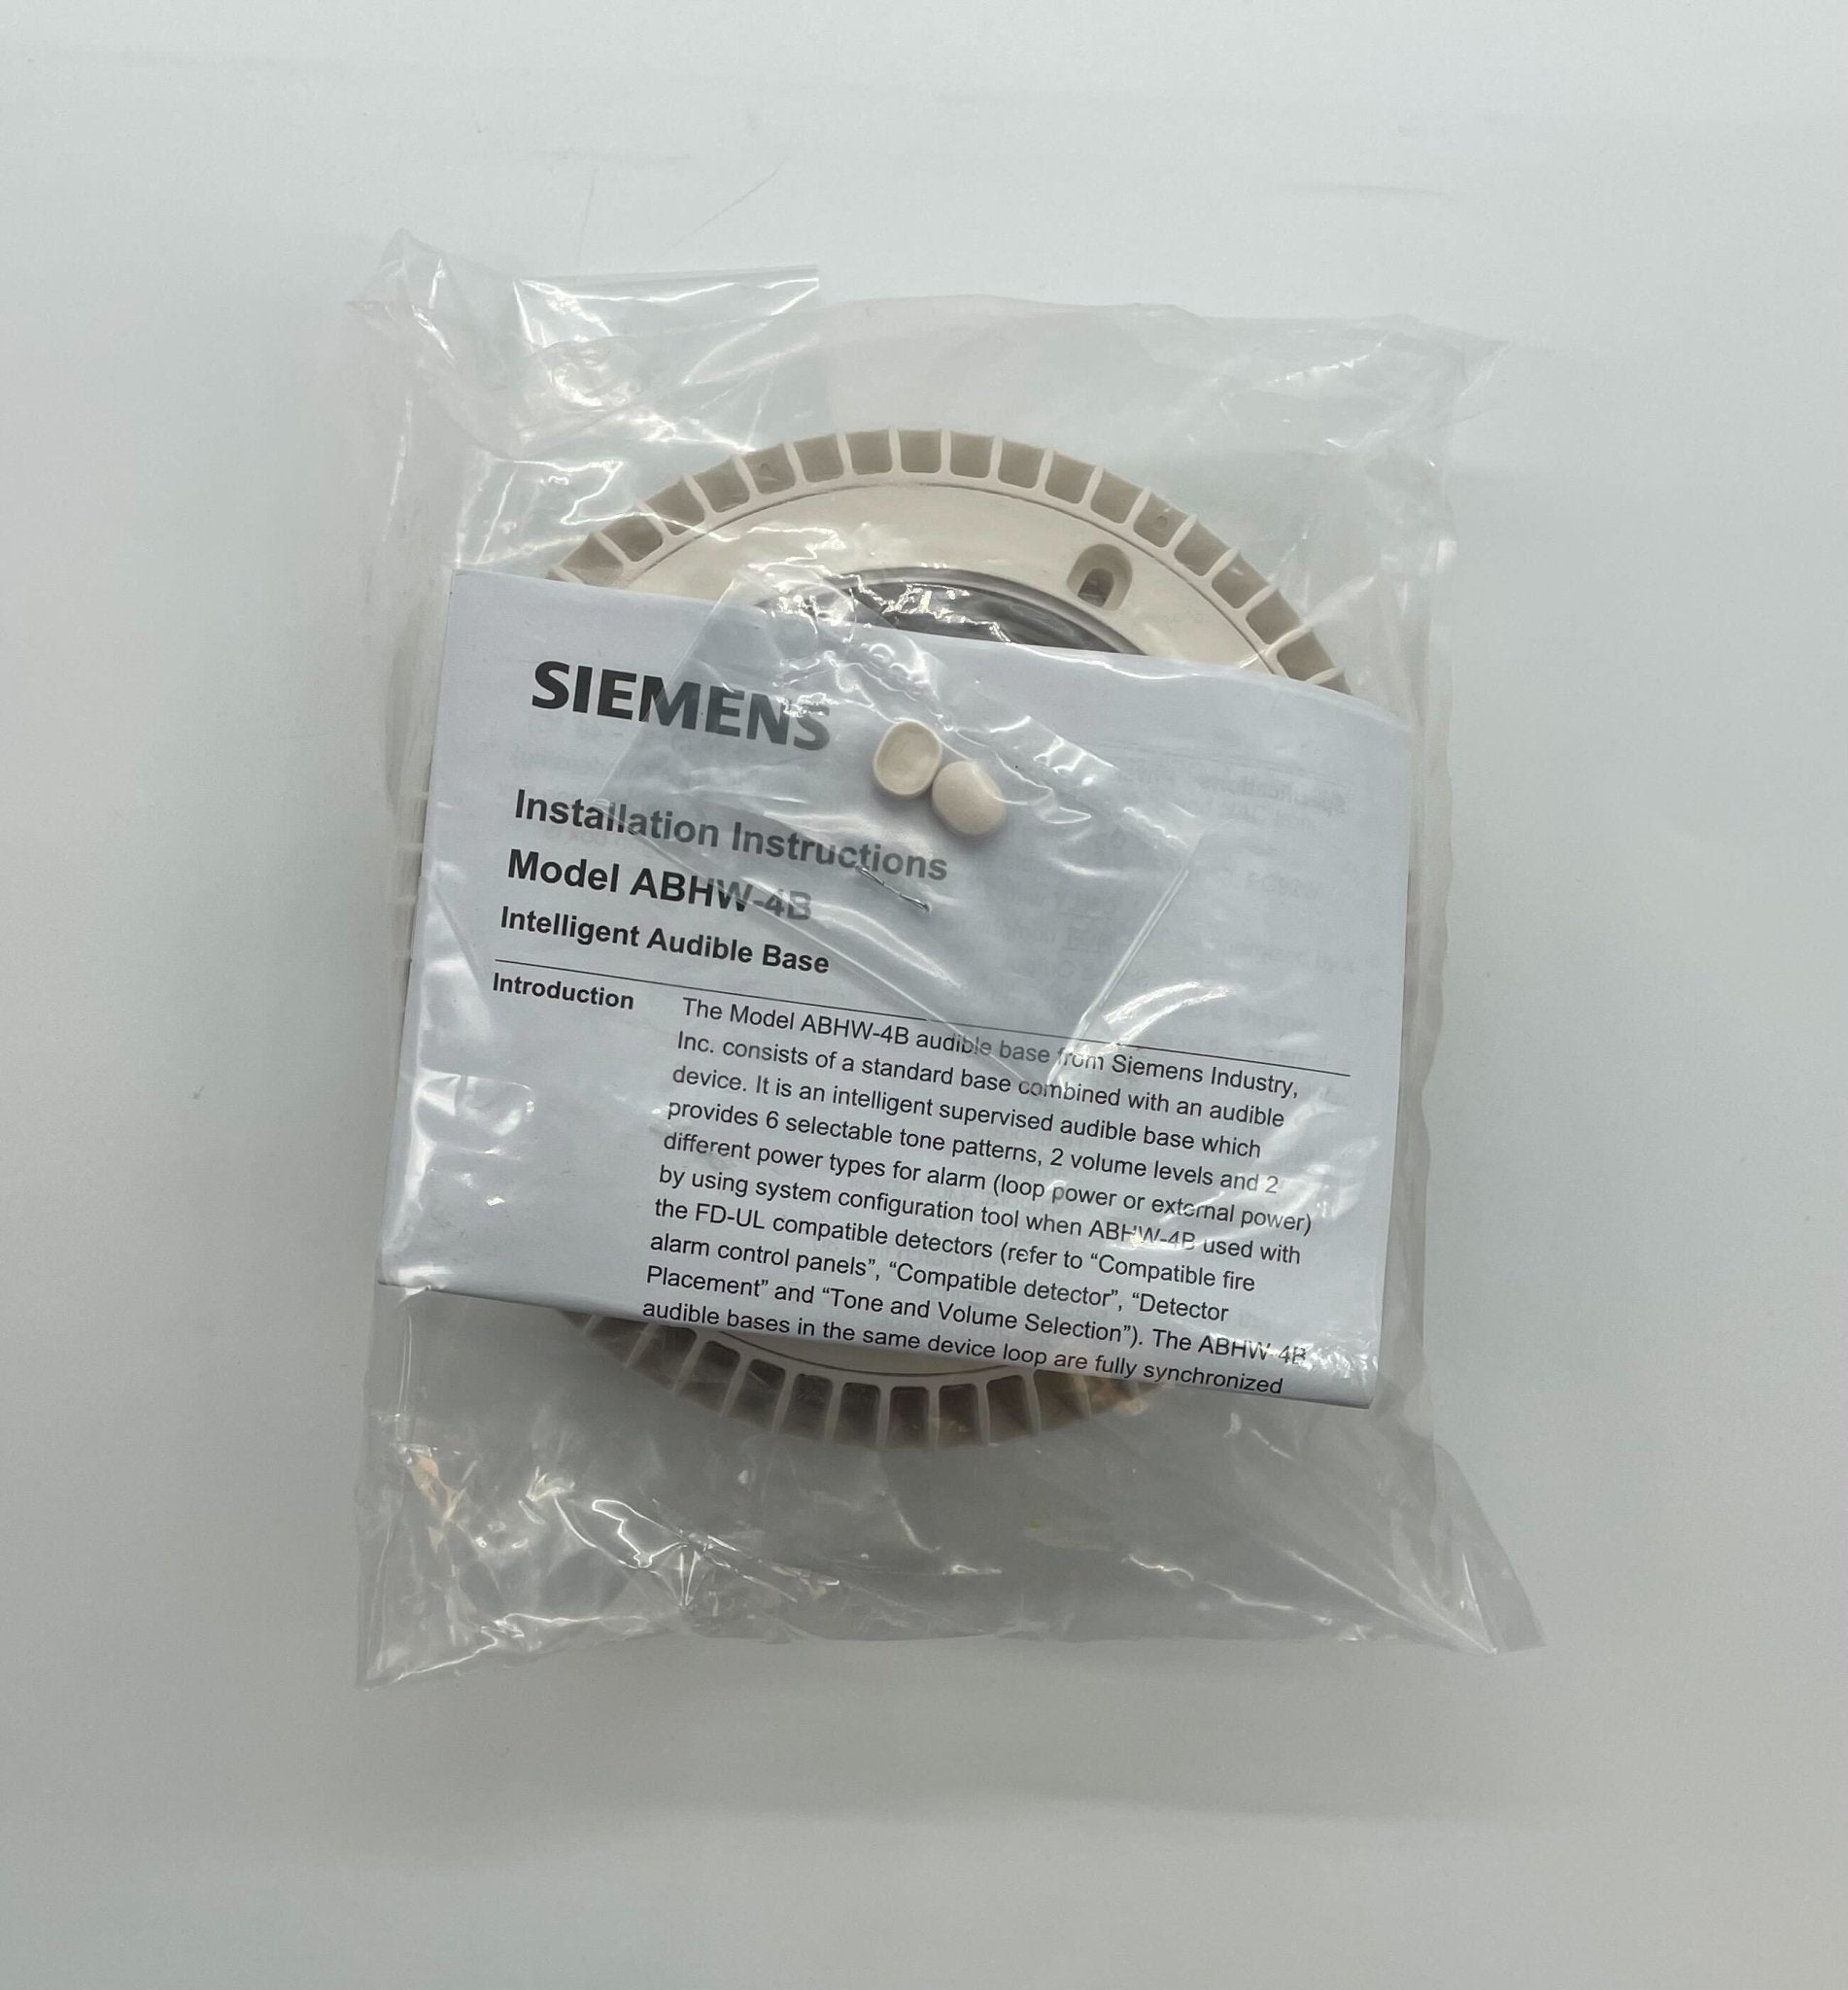 Siemens ABHW-4B - The Fire Alarm Supplier